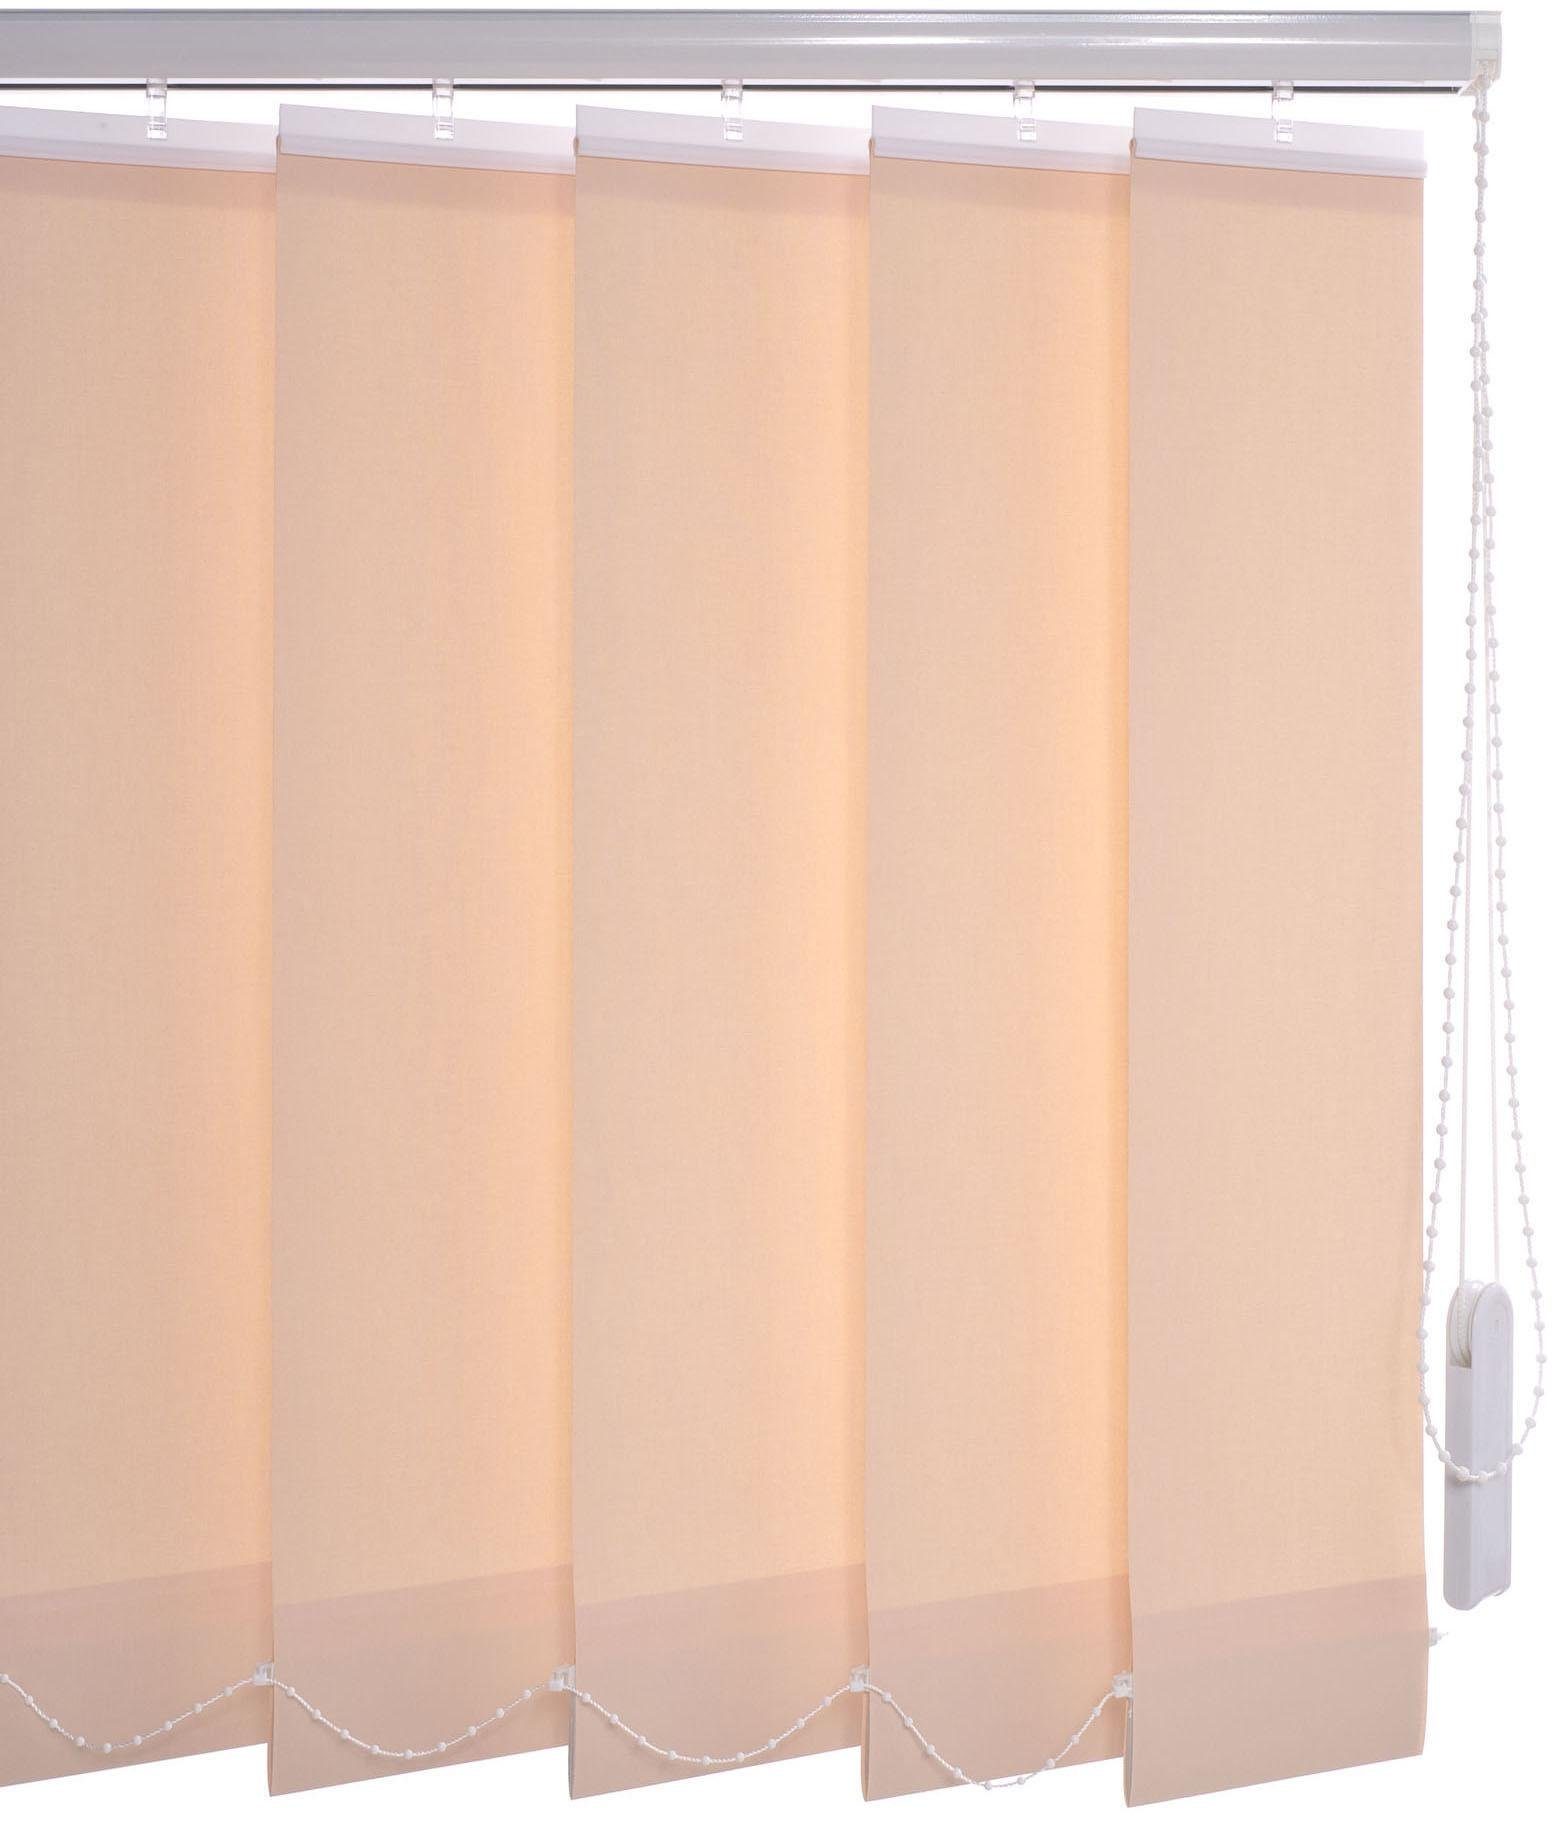 Lamellenvorhang Vertikalanlage 127 Liedeco, Bohren mm, apricot mit